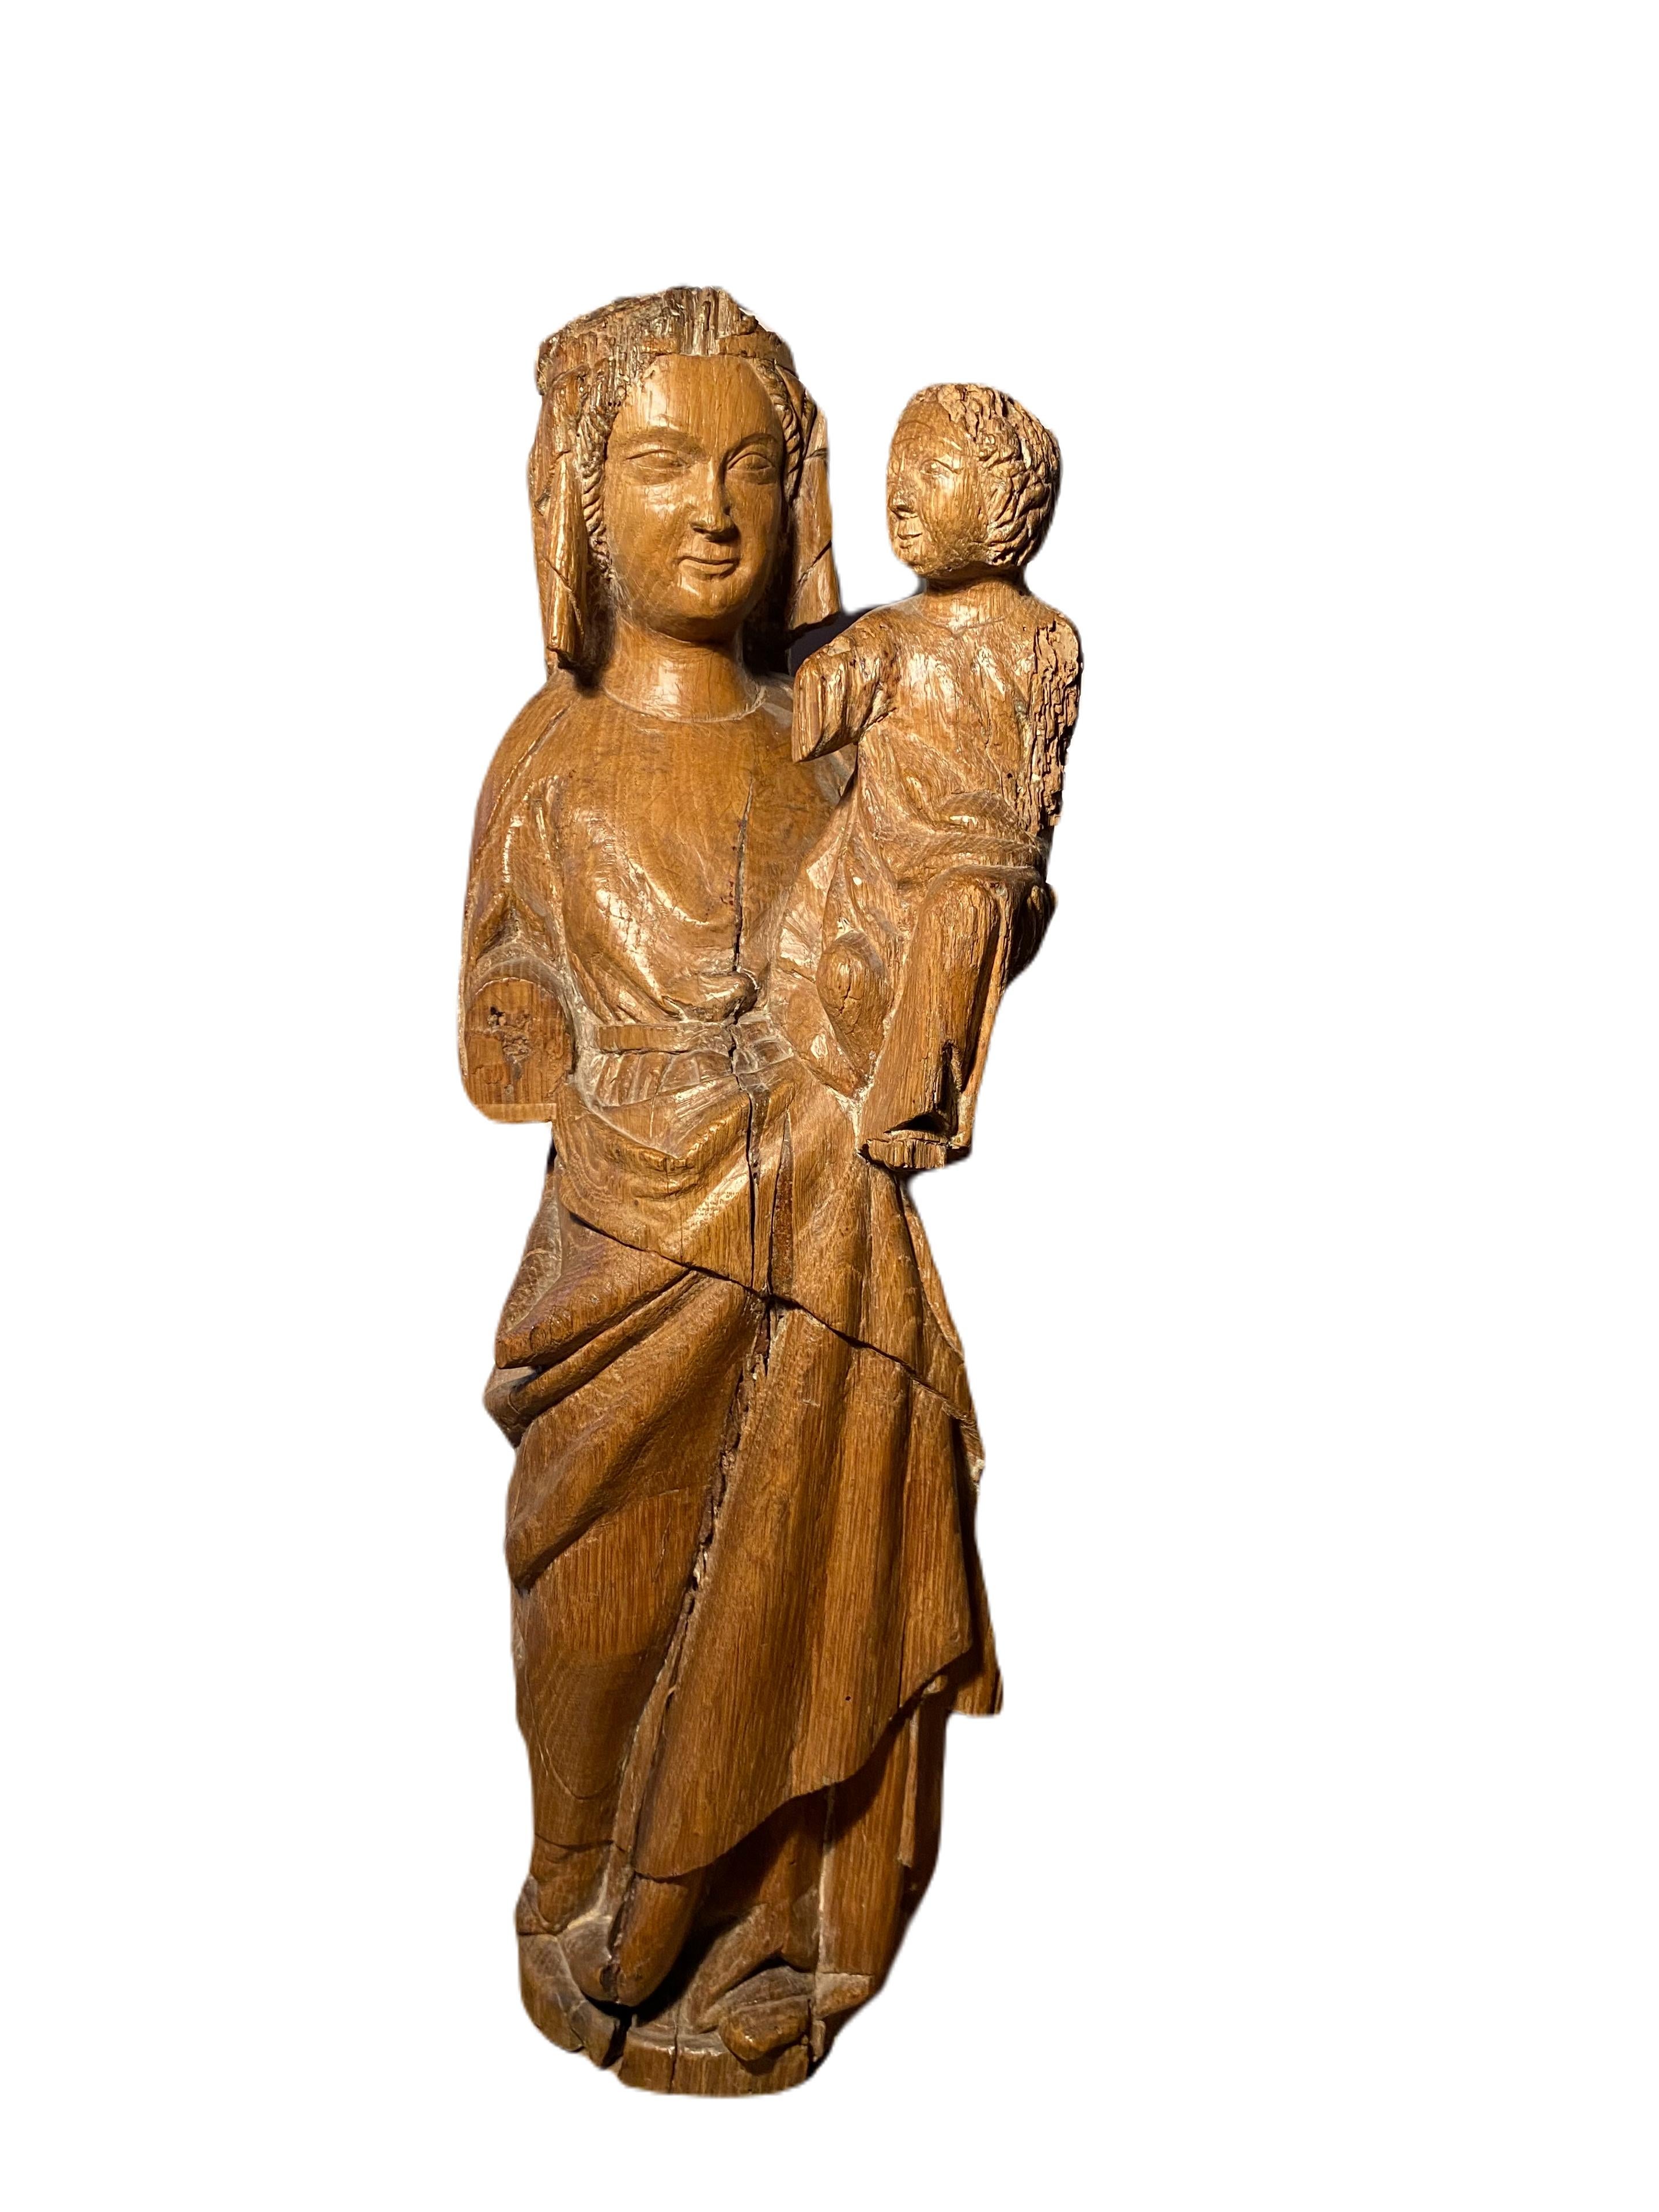 Unknown Figurative Sculpture - Madonna and Child. 14th century Parisian workshops.